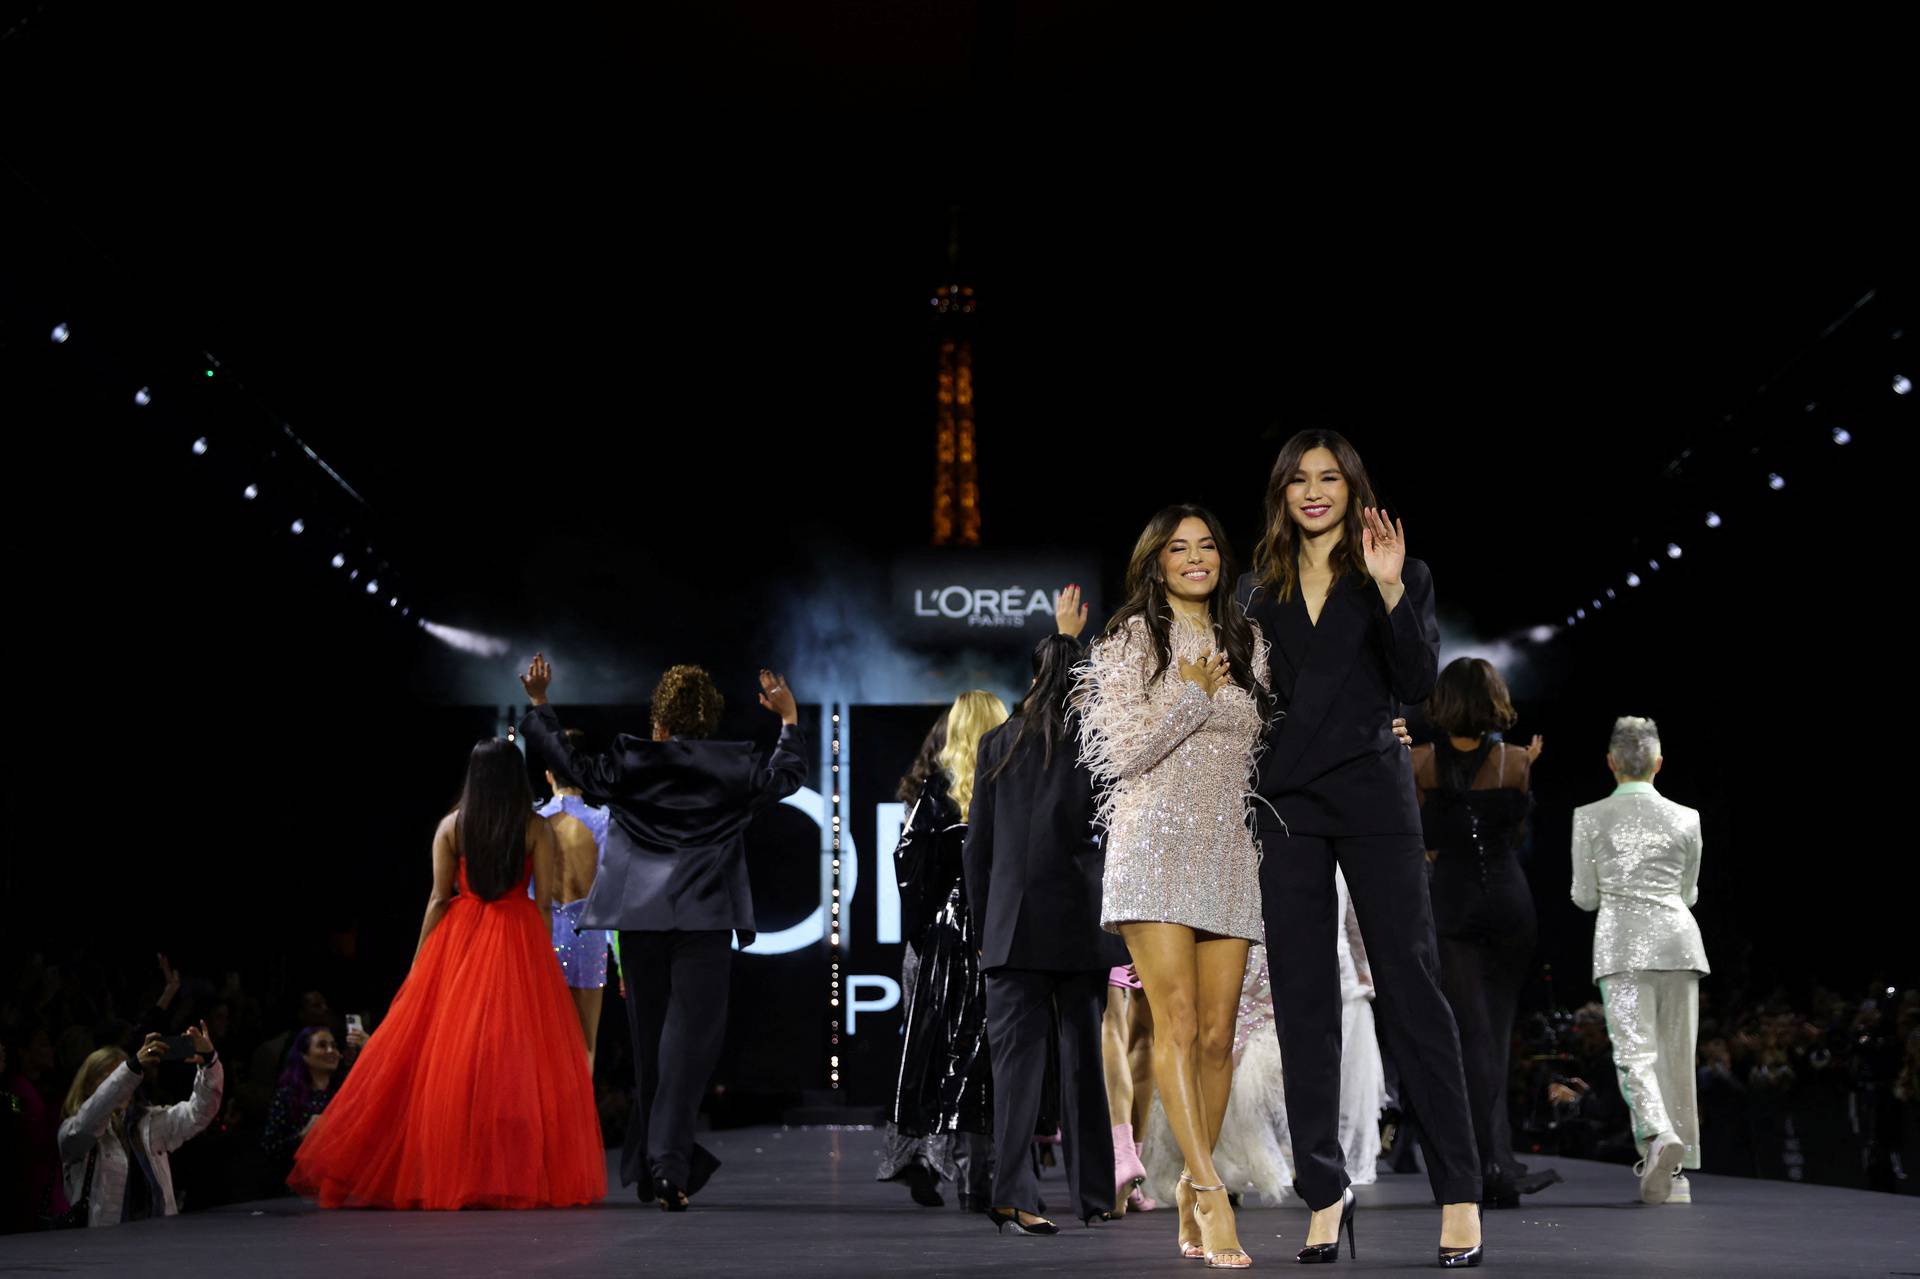 L'Oreal event show as part of Paris Fashion Week in Paris